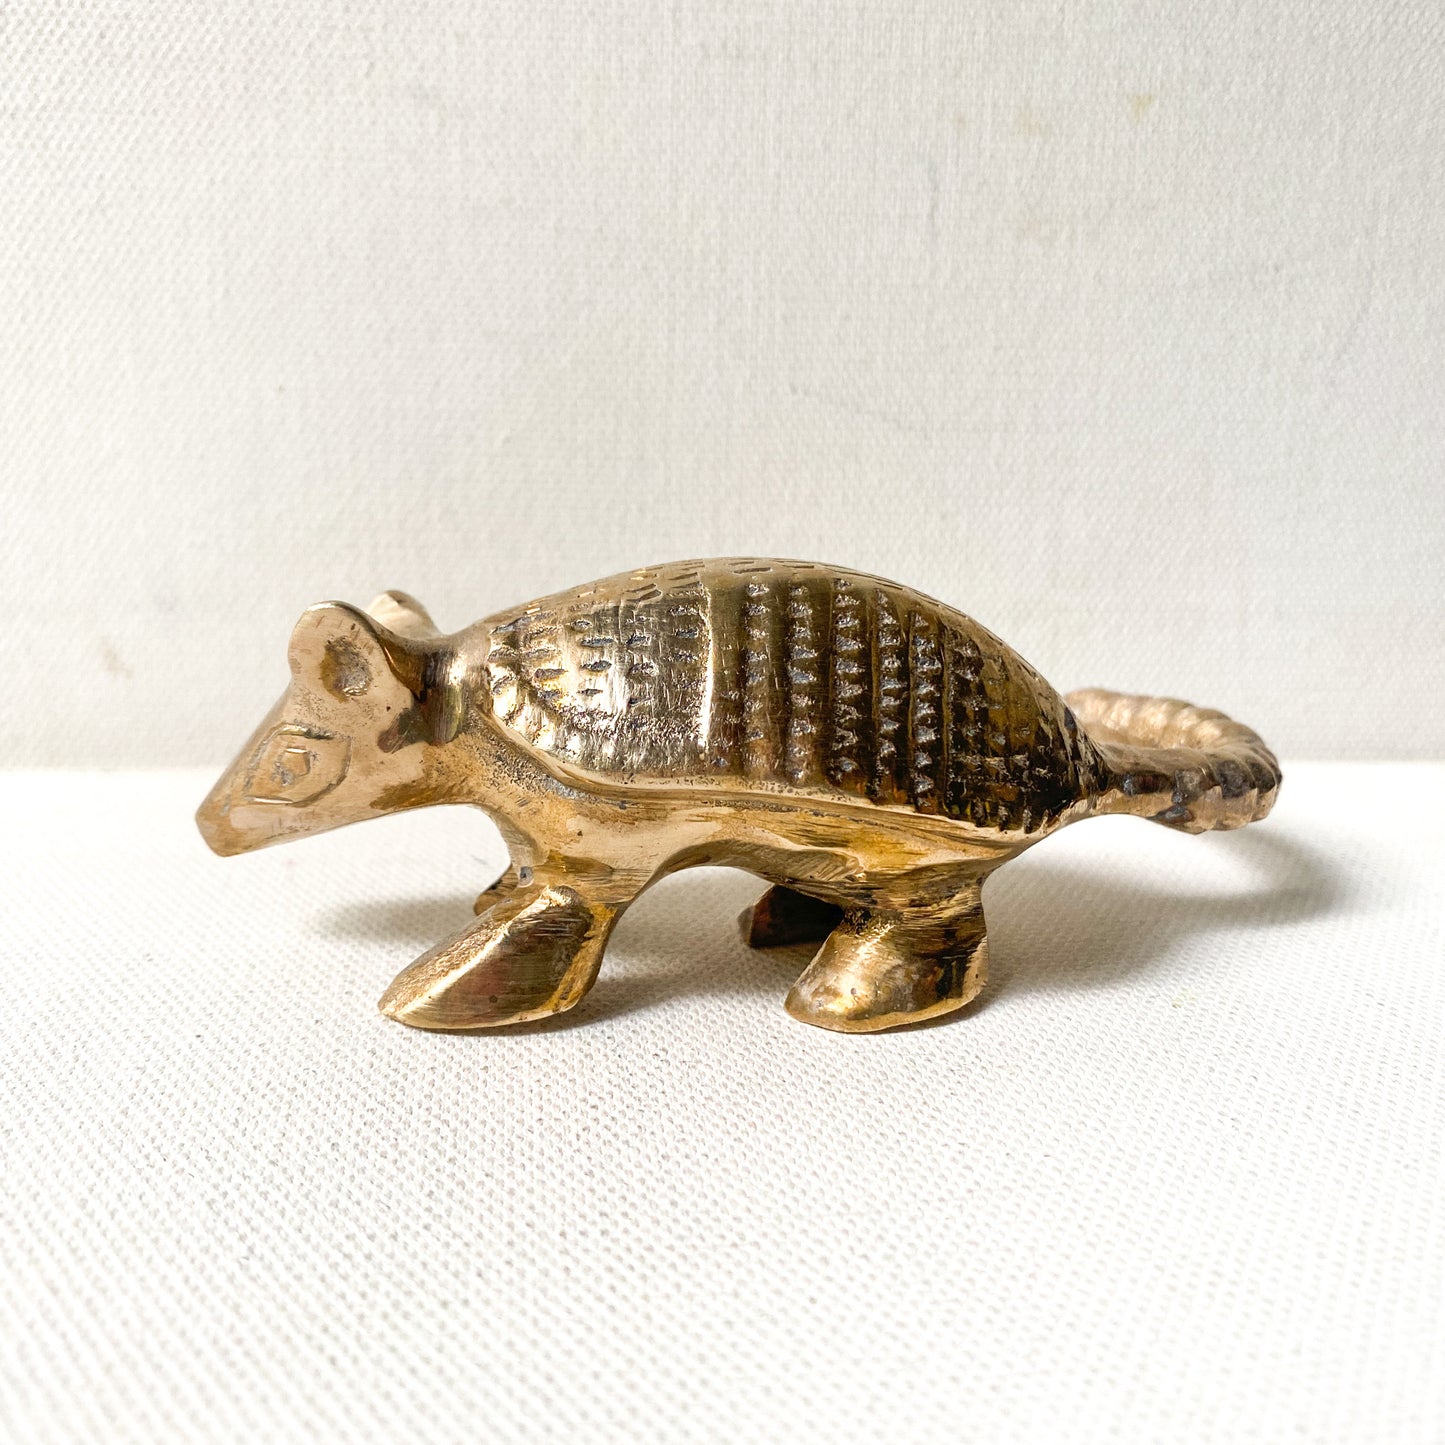 Small vintage brass armadillo figurine